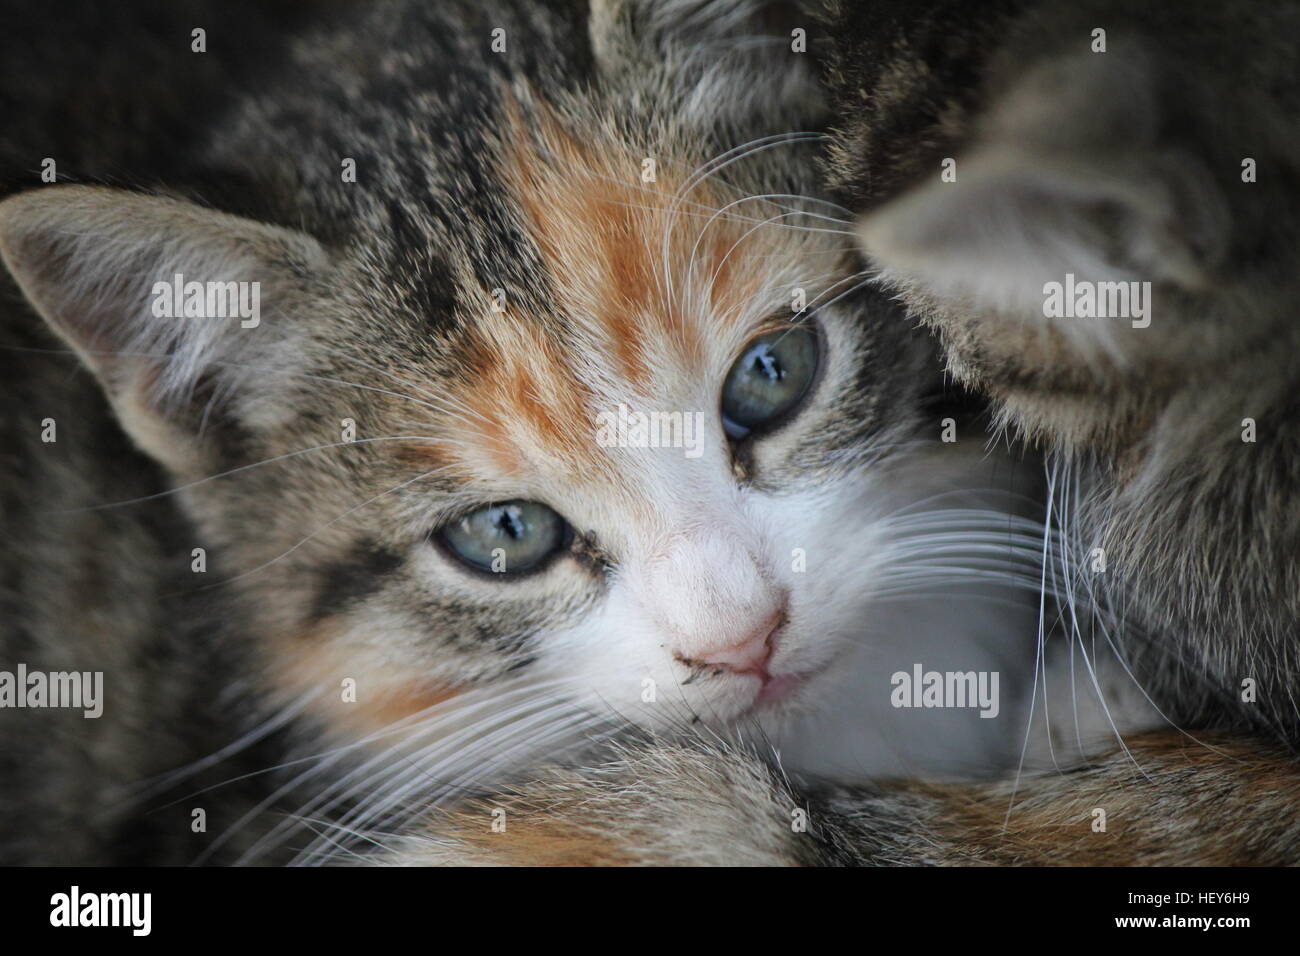 Kedi yavrusu hi-res stock photography and images - Alamy